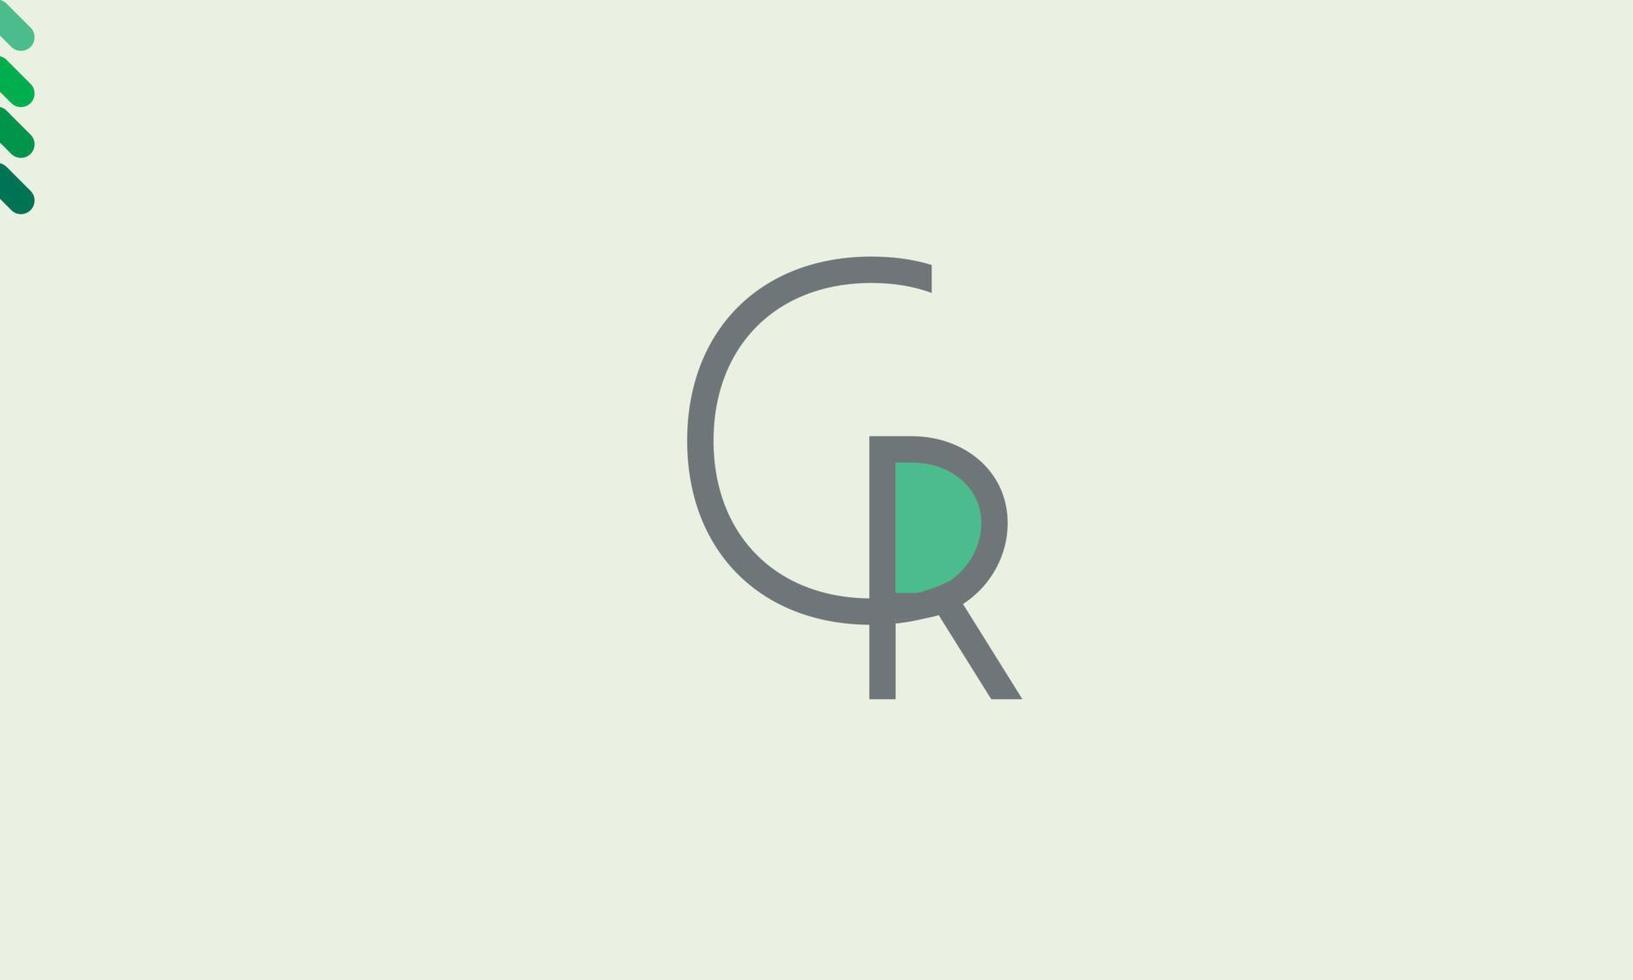 letras do alfabeto iniciais monograma logotipo cr, rc, c e r vetor